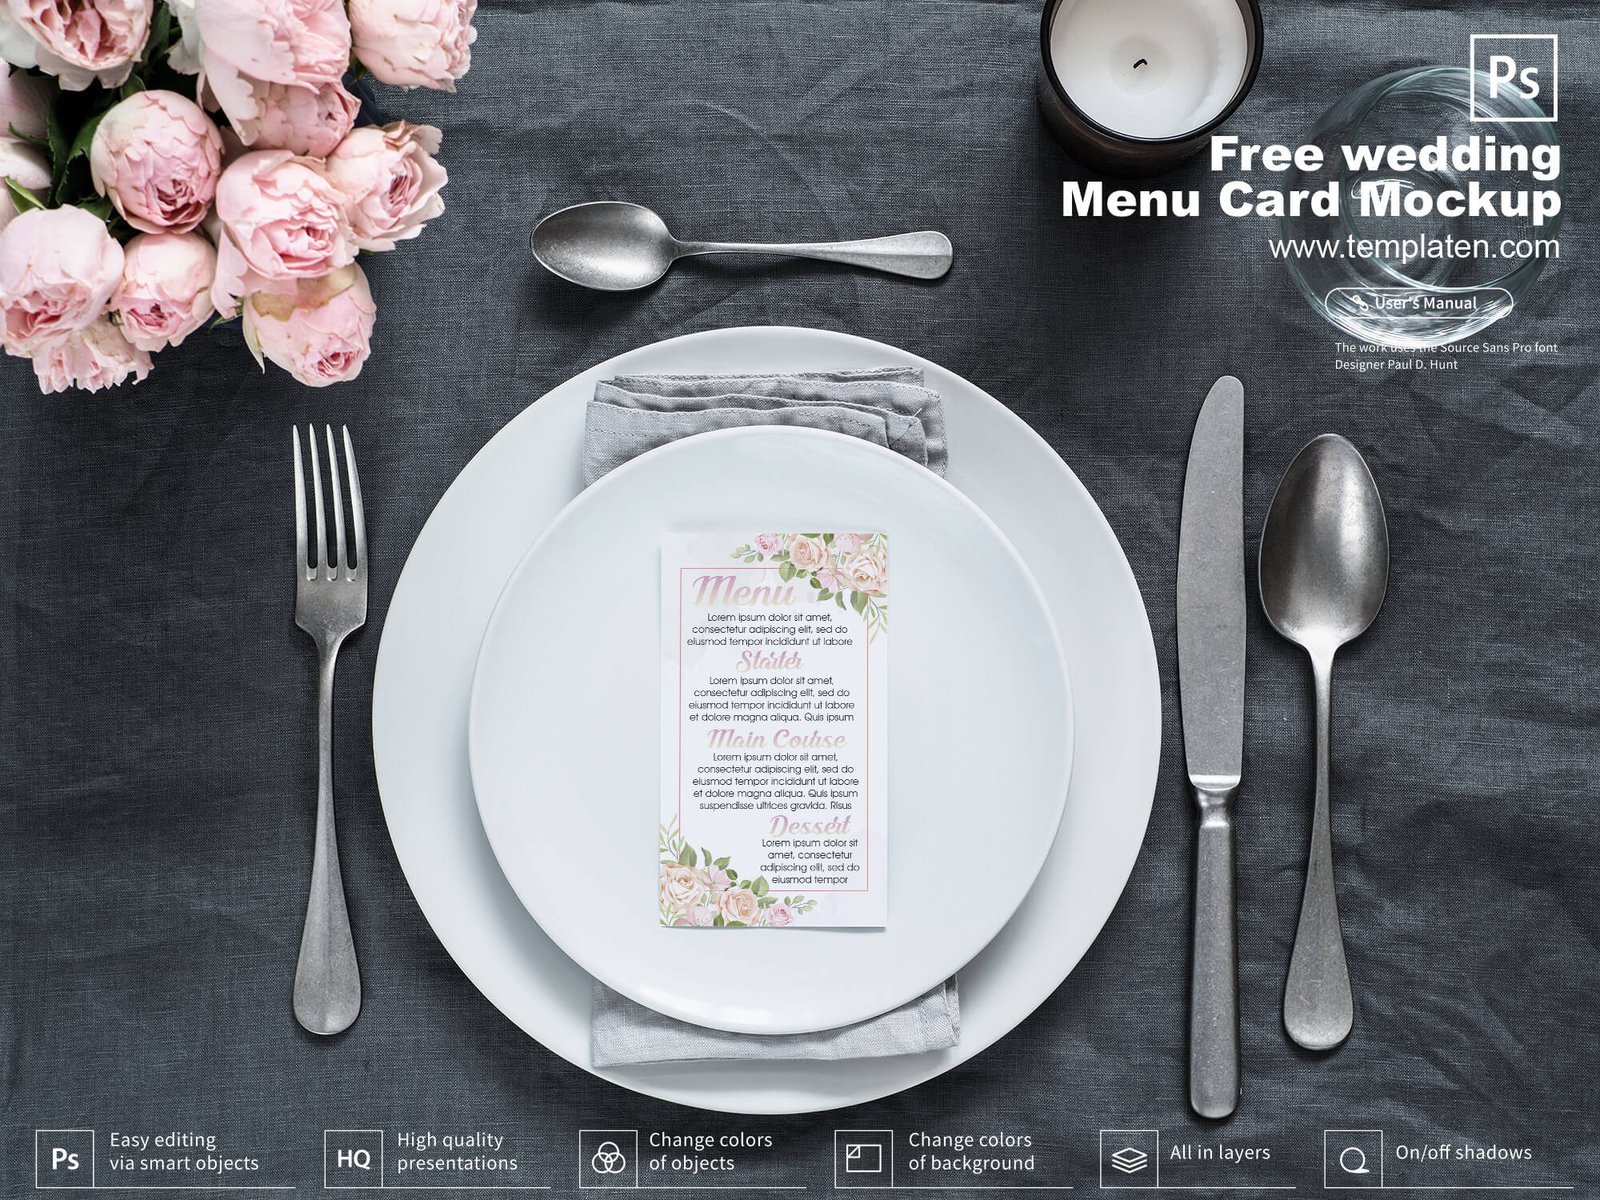 Download Free Wedding Menu Card Mockup PSD Template - Mockup Den